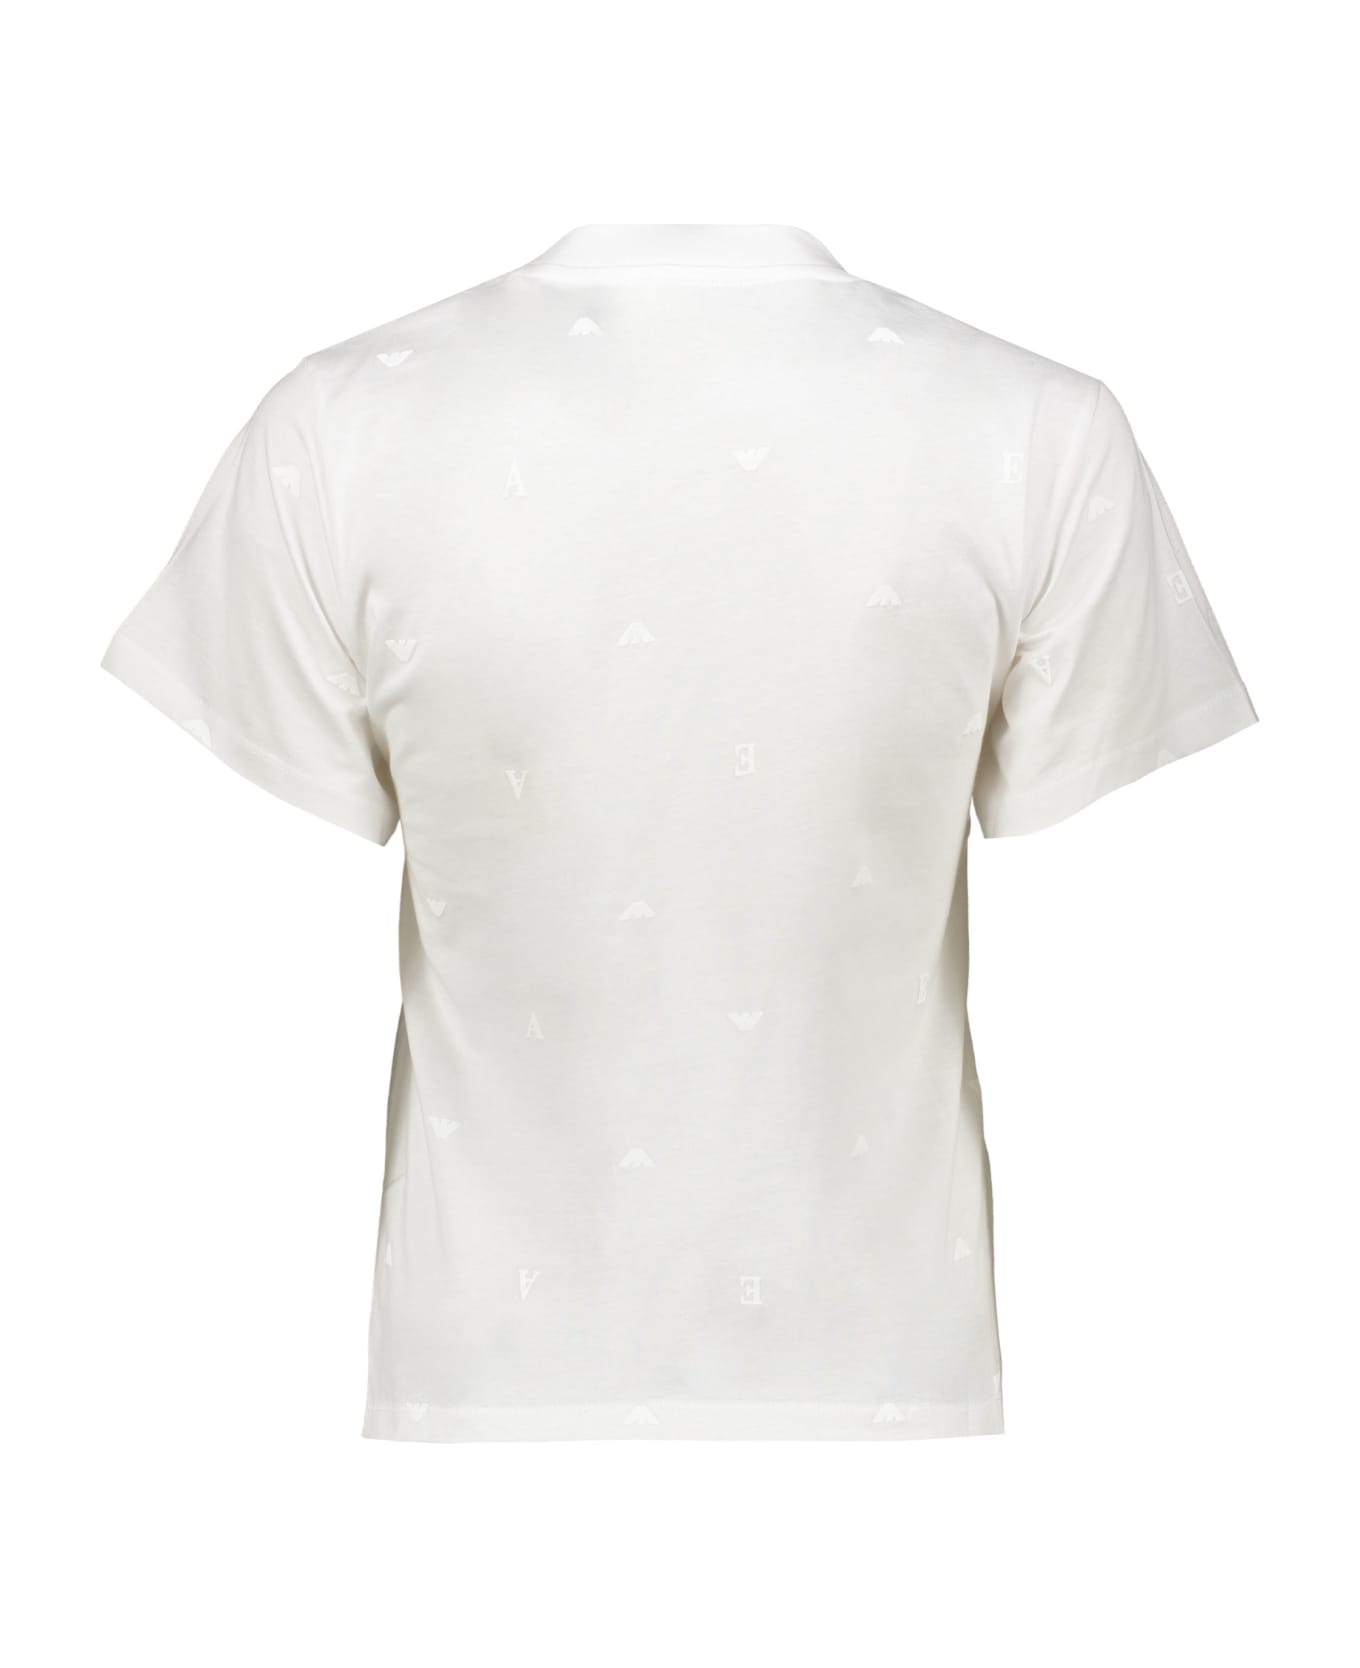 Emporio Armani Printed Cotton T-shirt - White